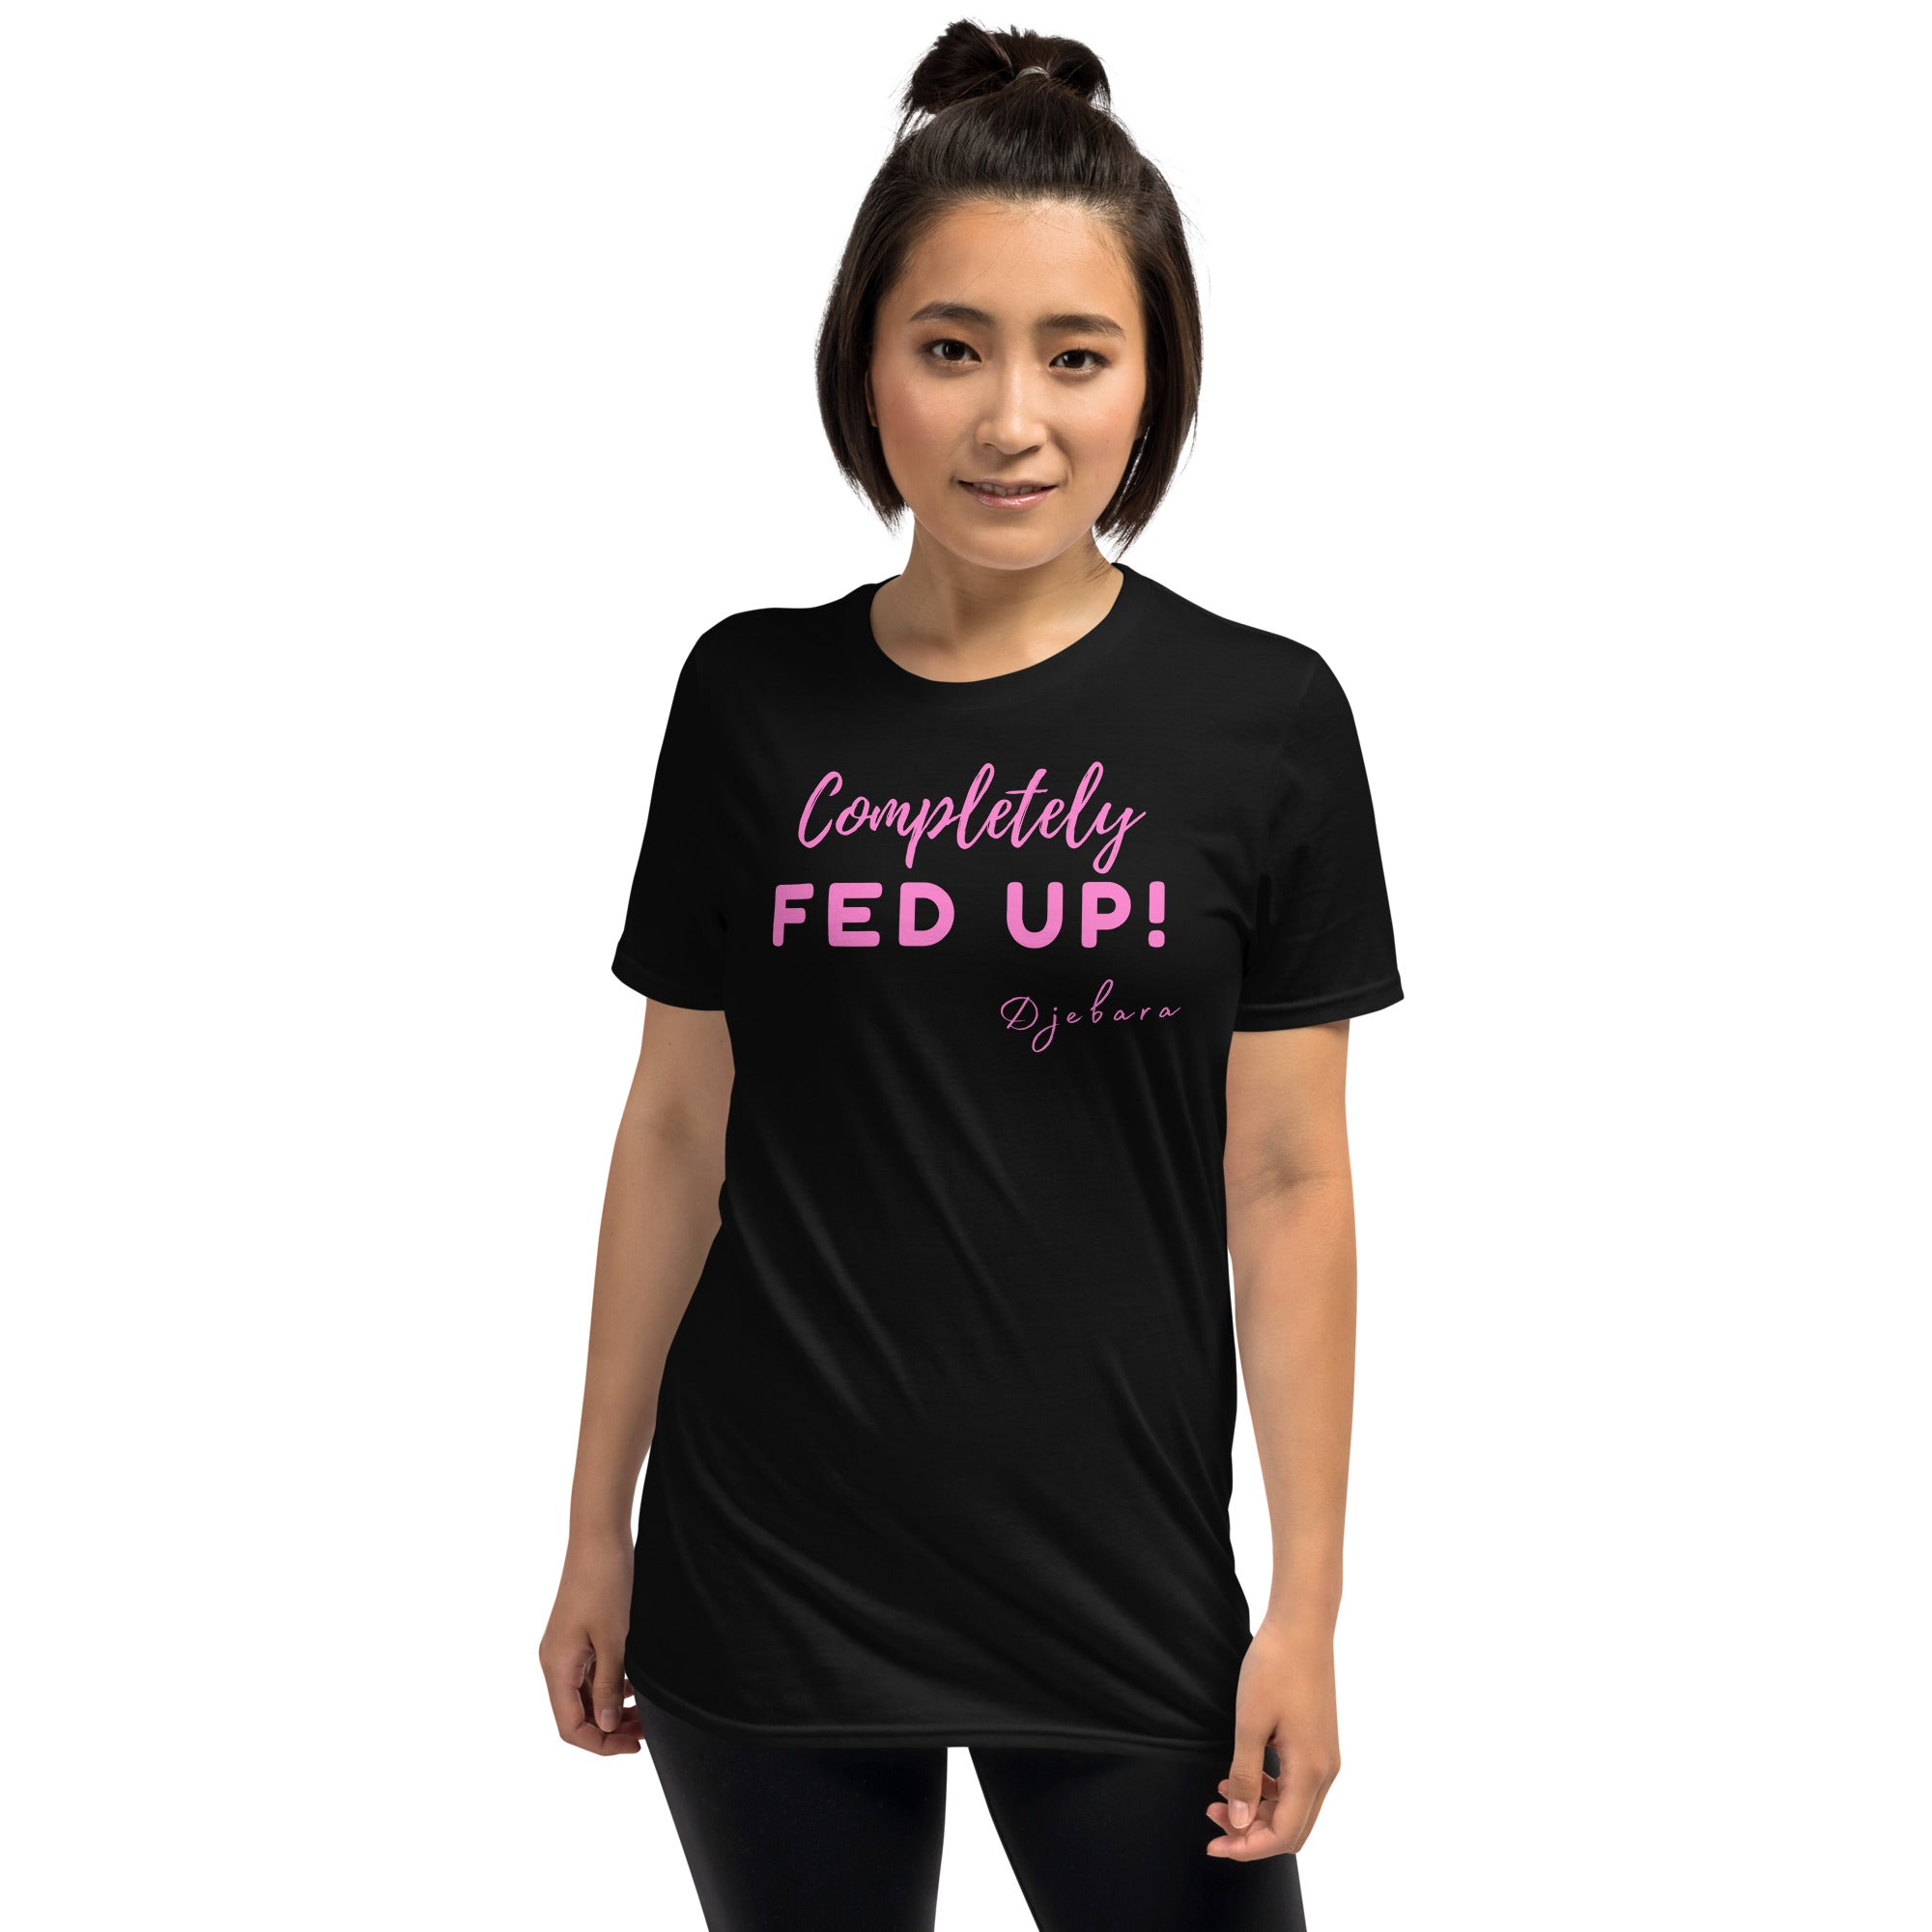 Completely FED UP! Short-Sleeve Gildan Unisex T-Shirt (Pink) S-3XL